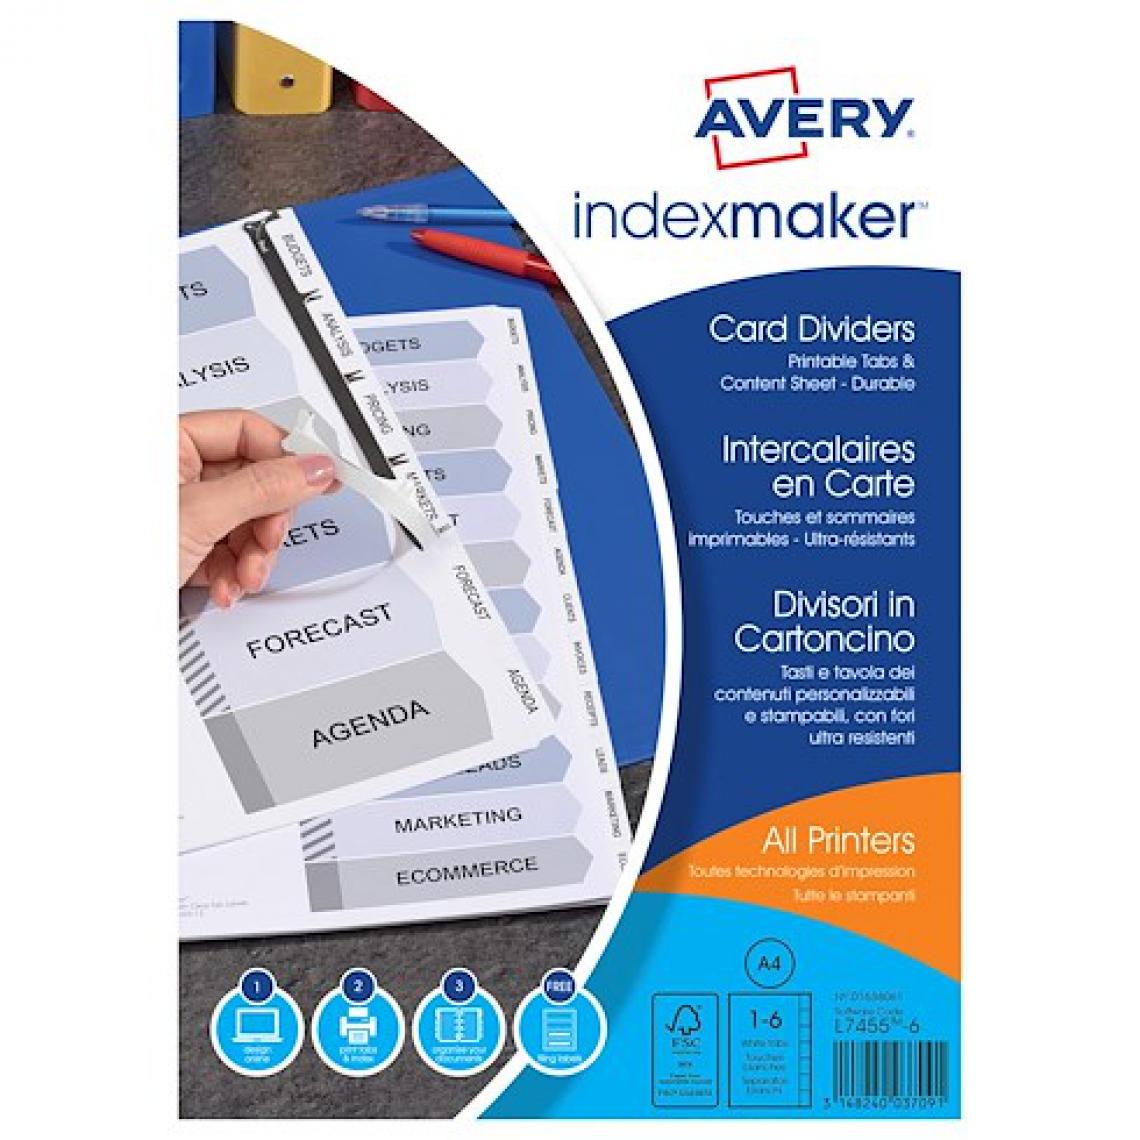 Avery - Intercalaire neutre blanc A4 Avery Index Maker carton 6 onglets - 1 jeu - Accessoires Bureau